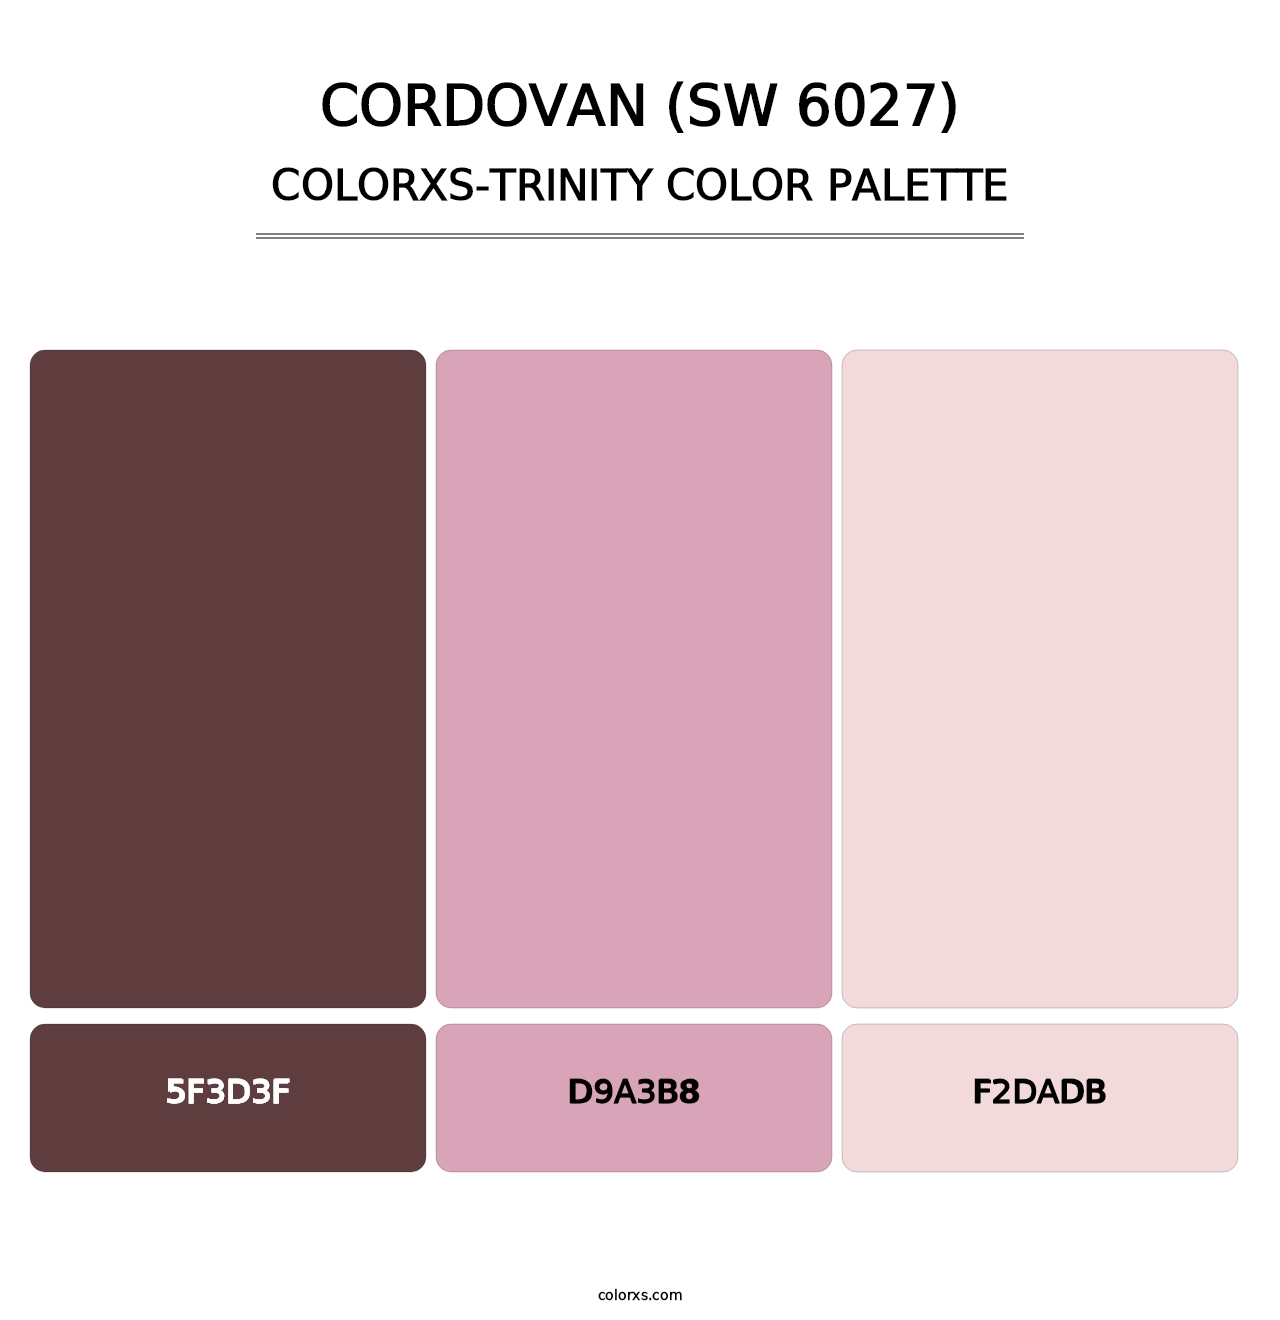 Cordovan (SW 6027) - Colorxs Trinity Palette